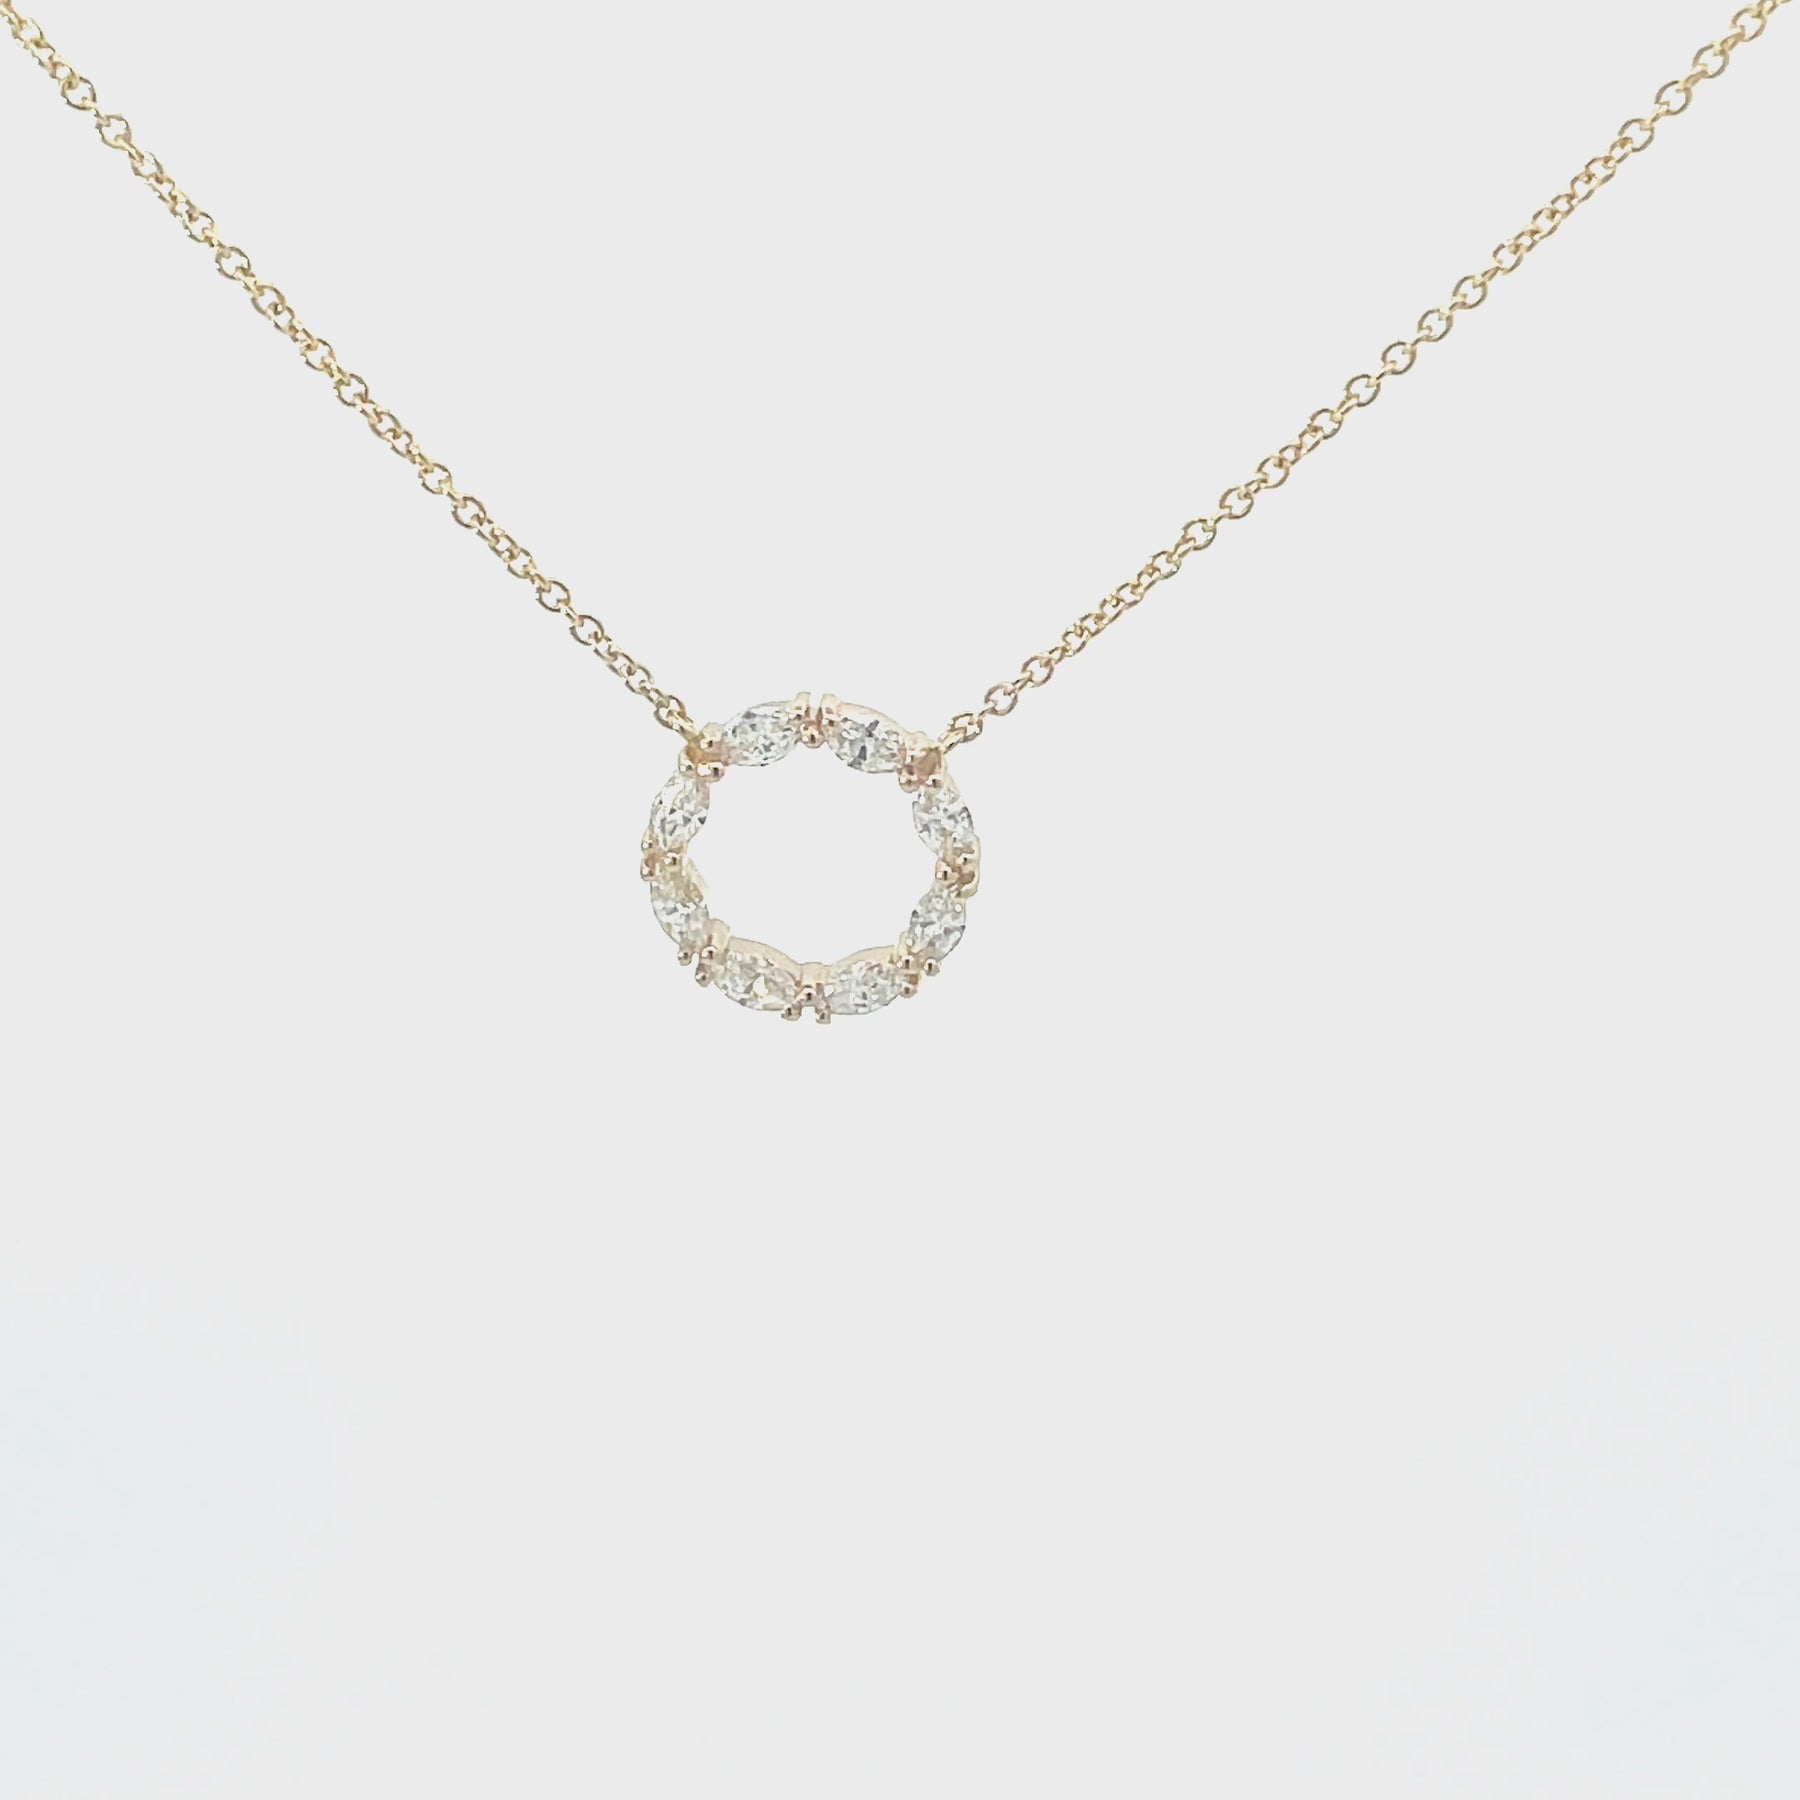 18K White Gold 7.48ctw Diamond Necklace